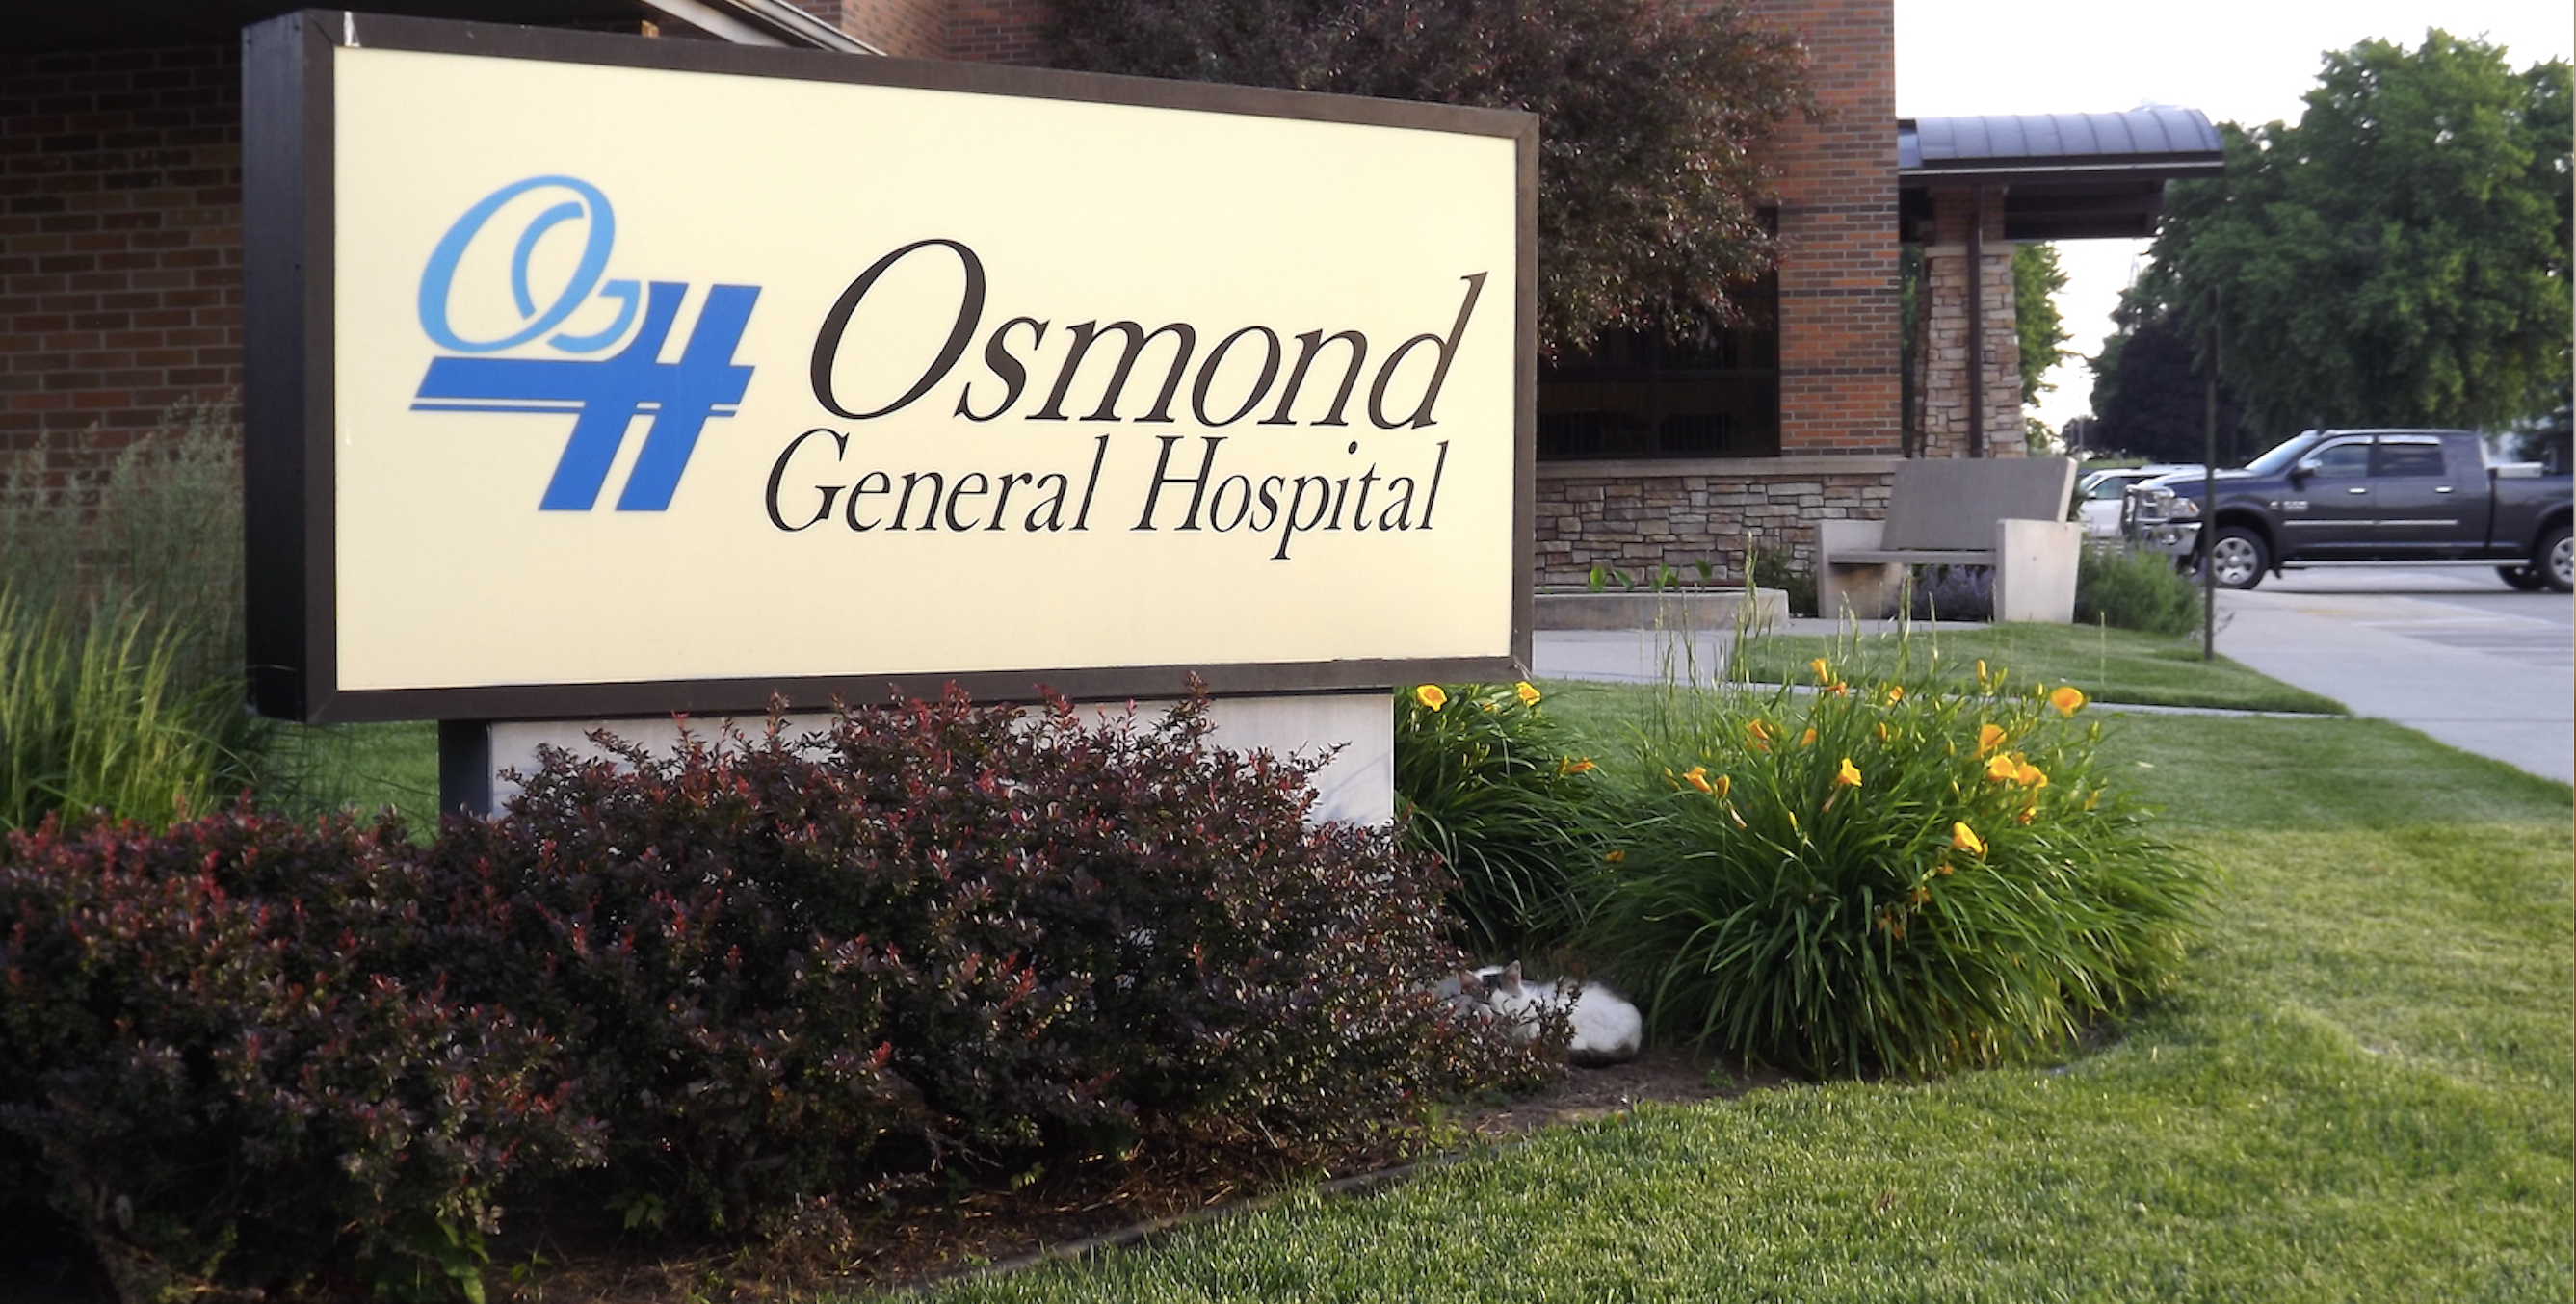 Osmond General Hospital Outdoor sign